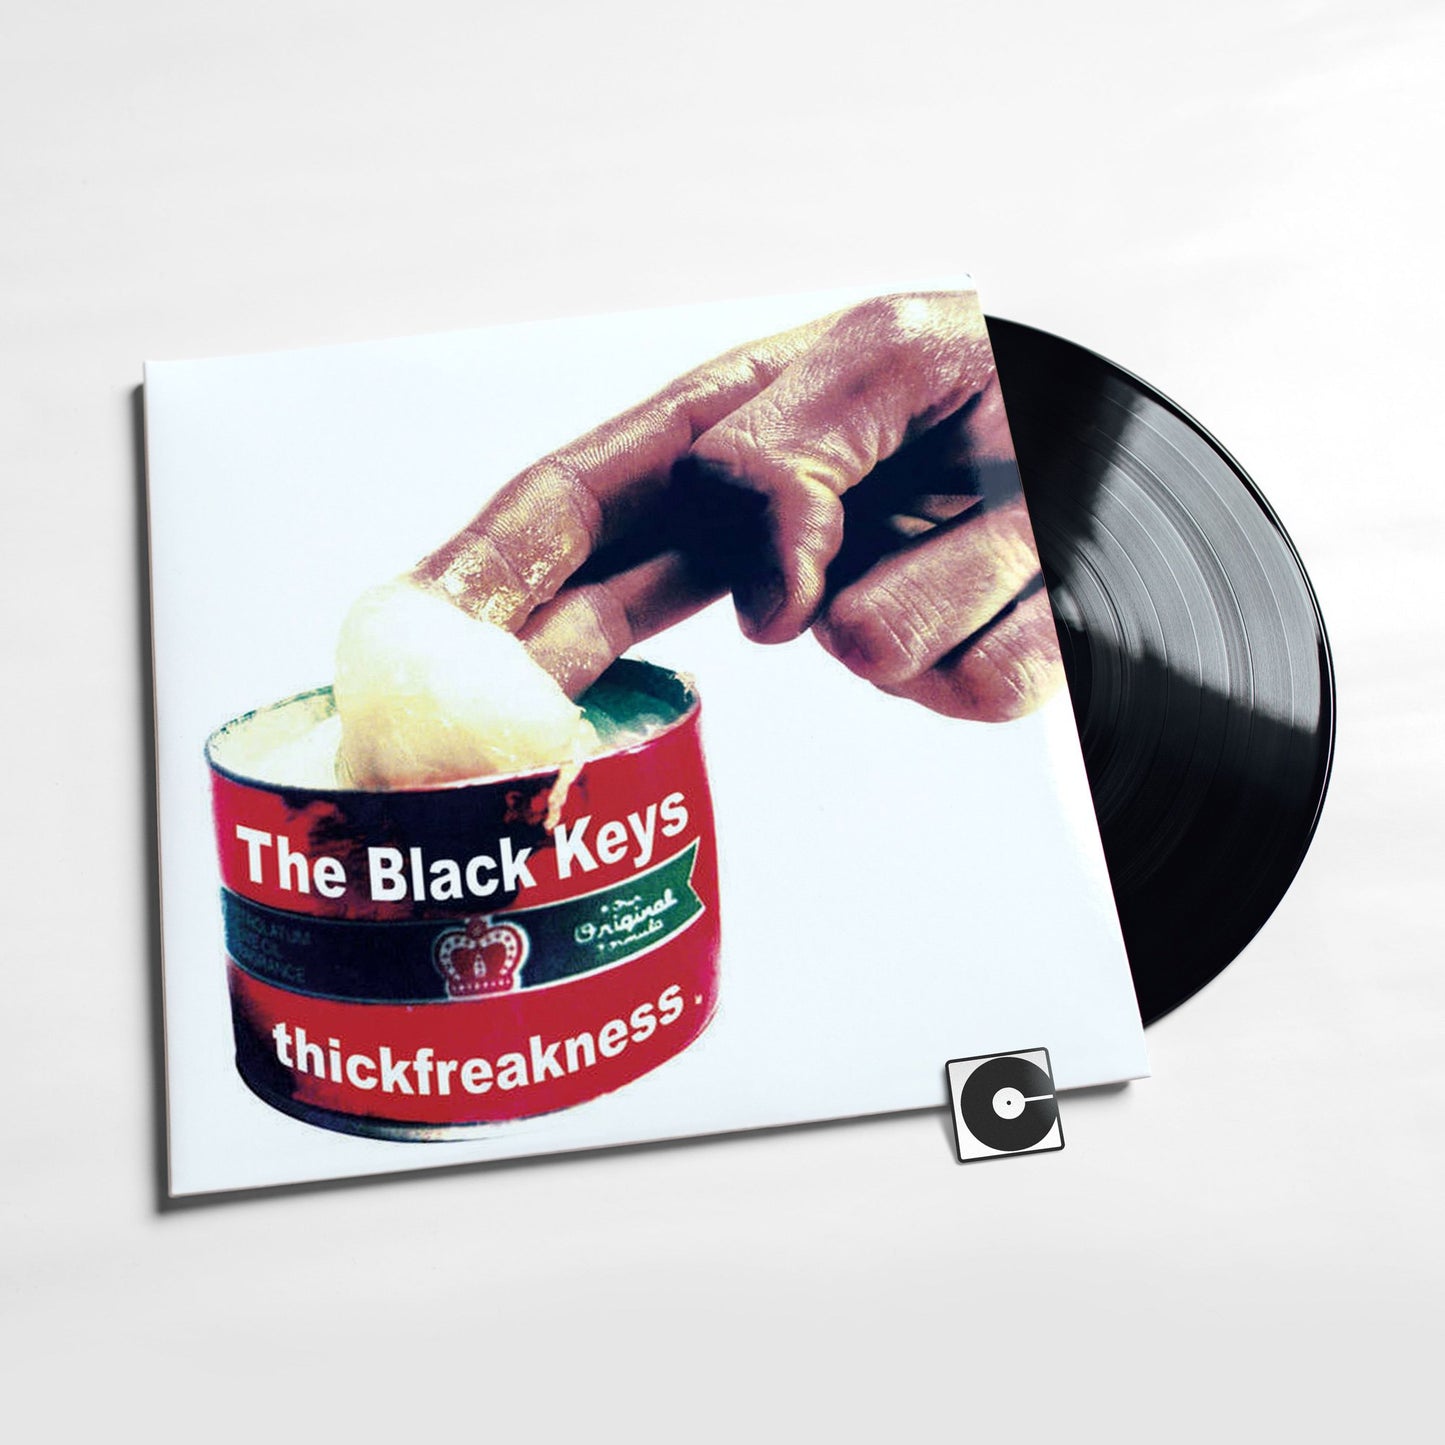 The Black Keys - "Thickfreakness"